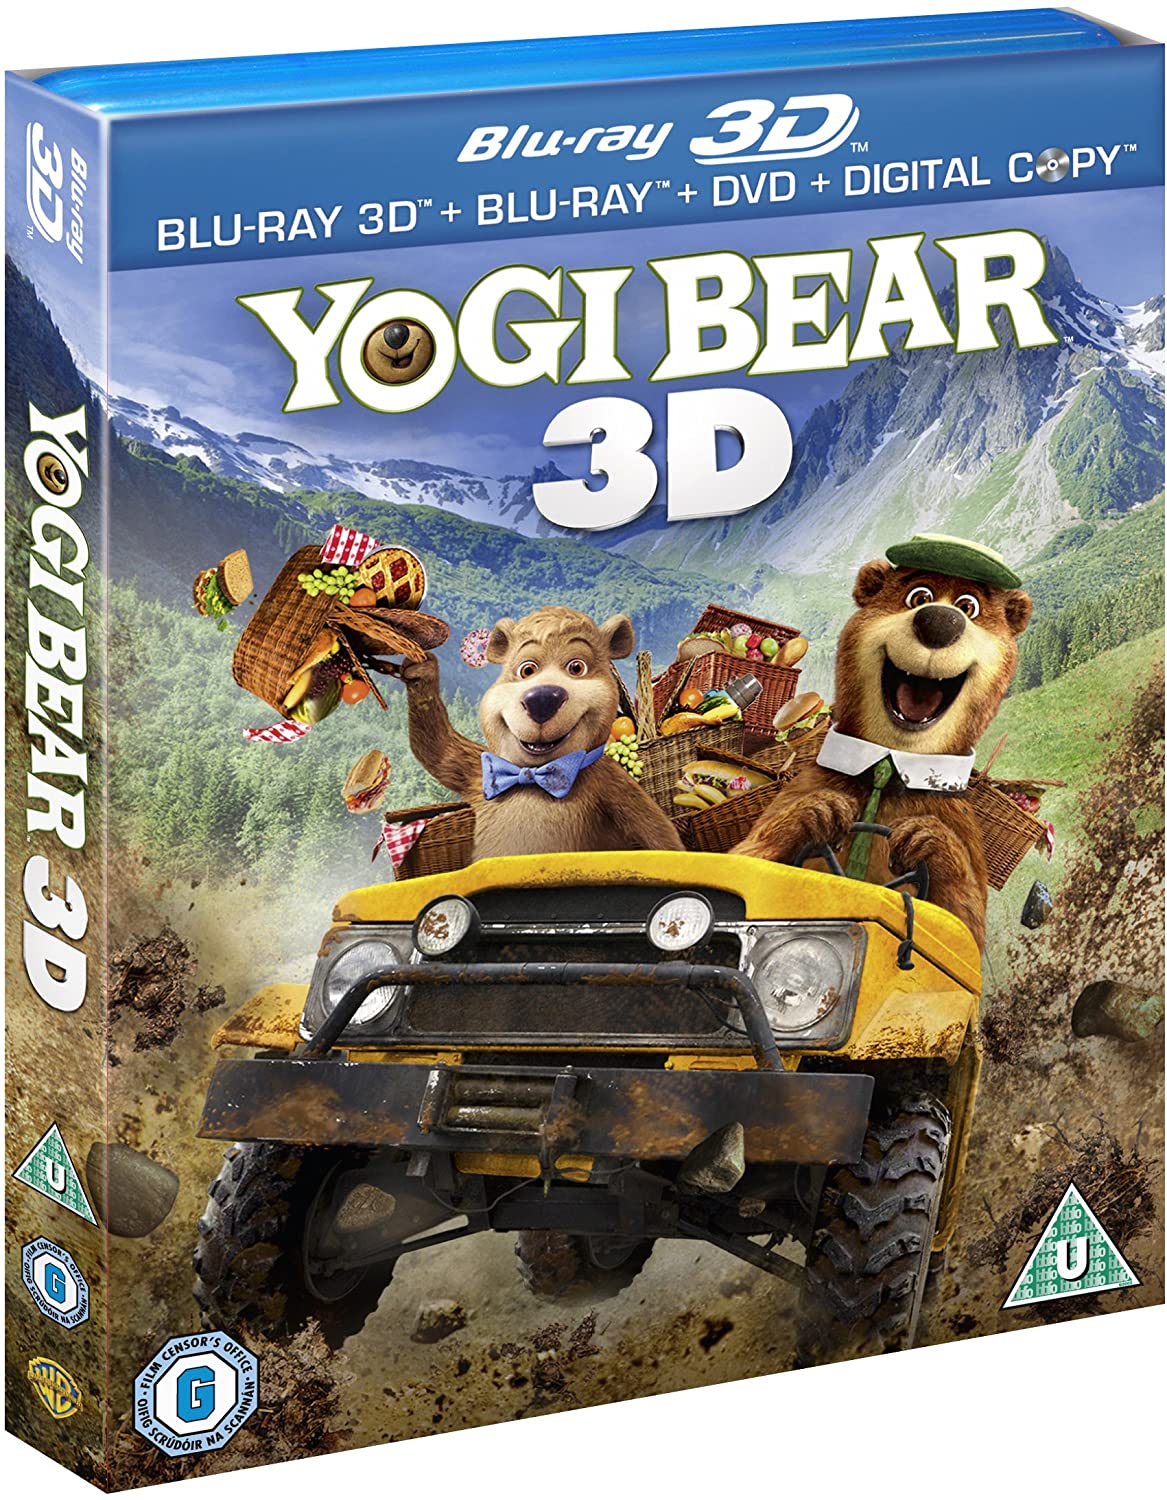 Yogi Bear (Blu-ray 3D + Blu-ray + DVD + Digital copy)